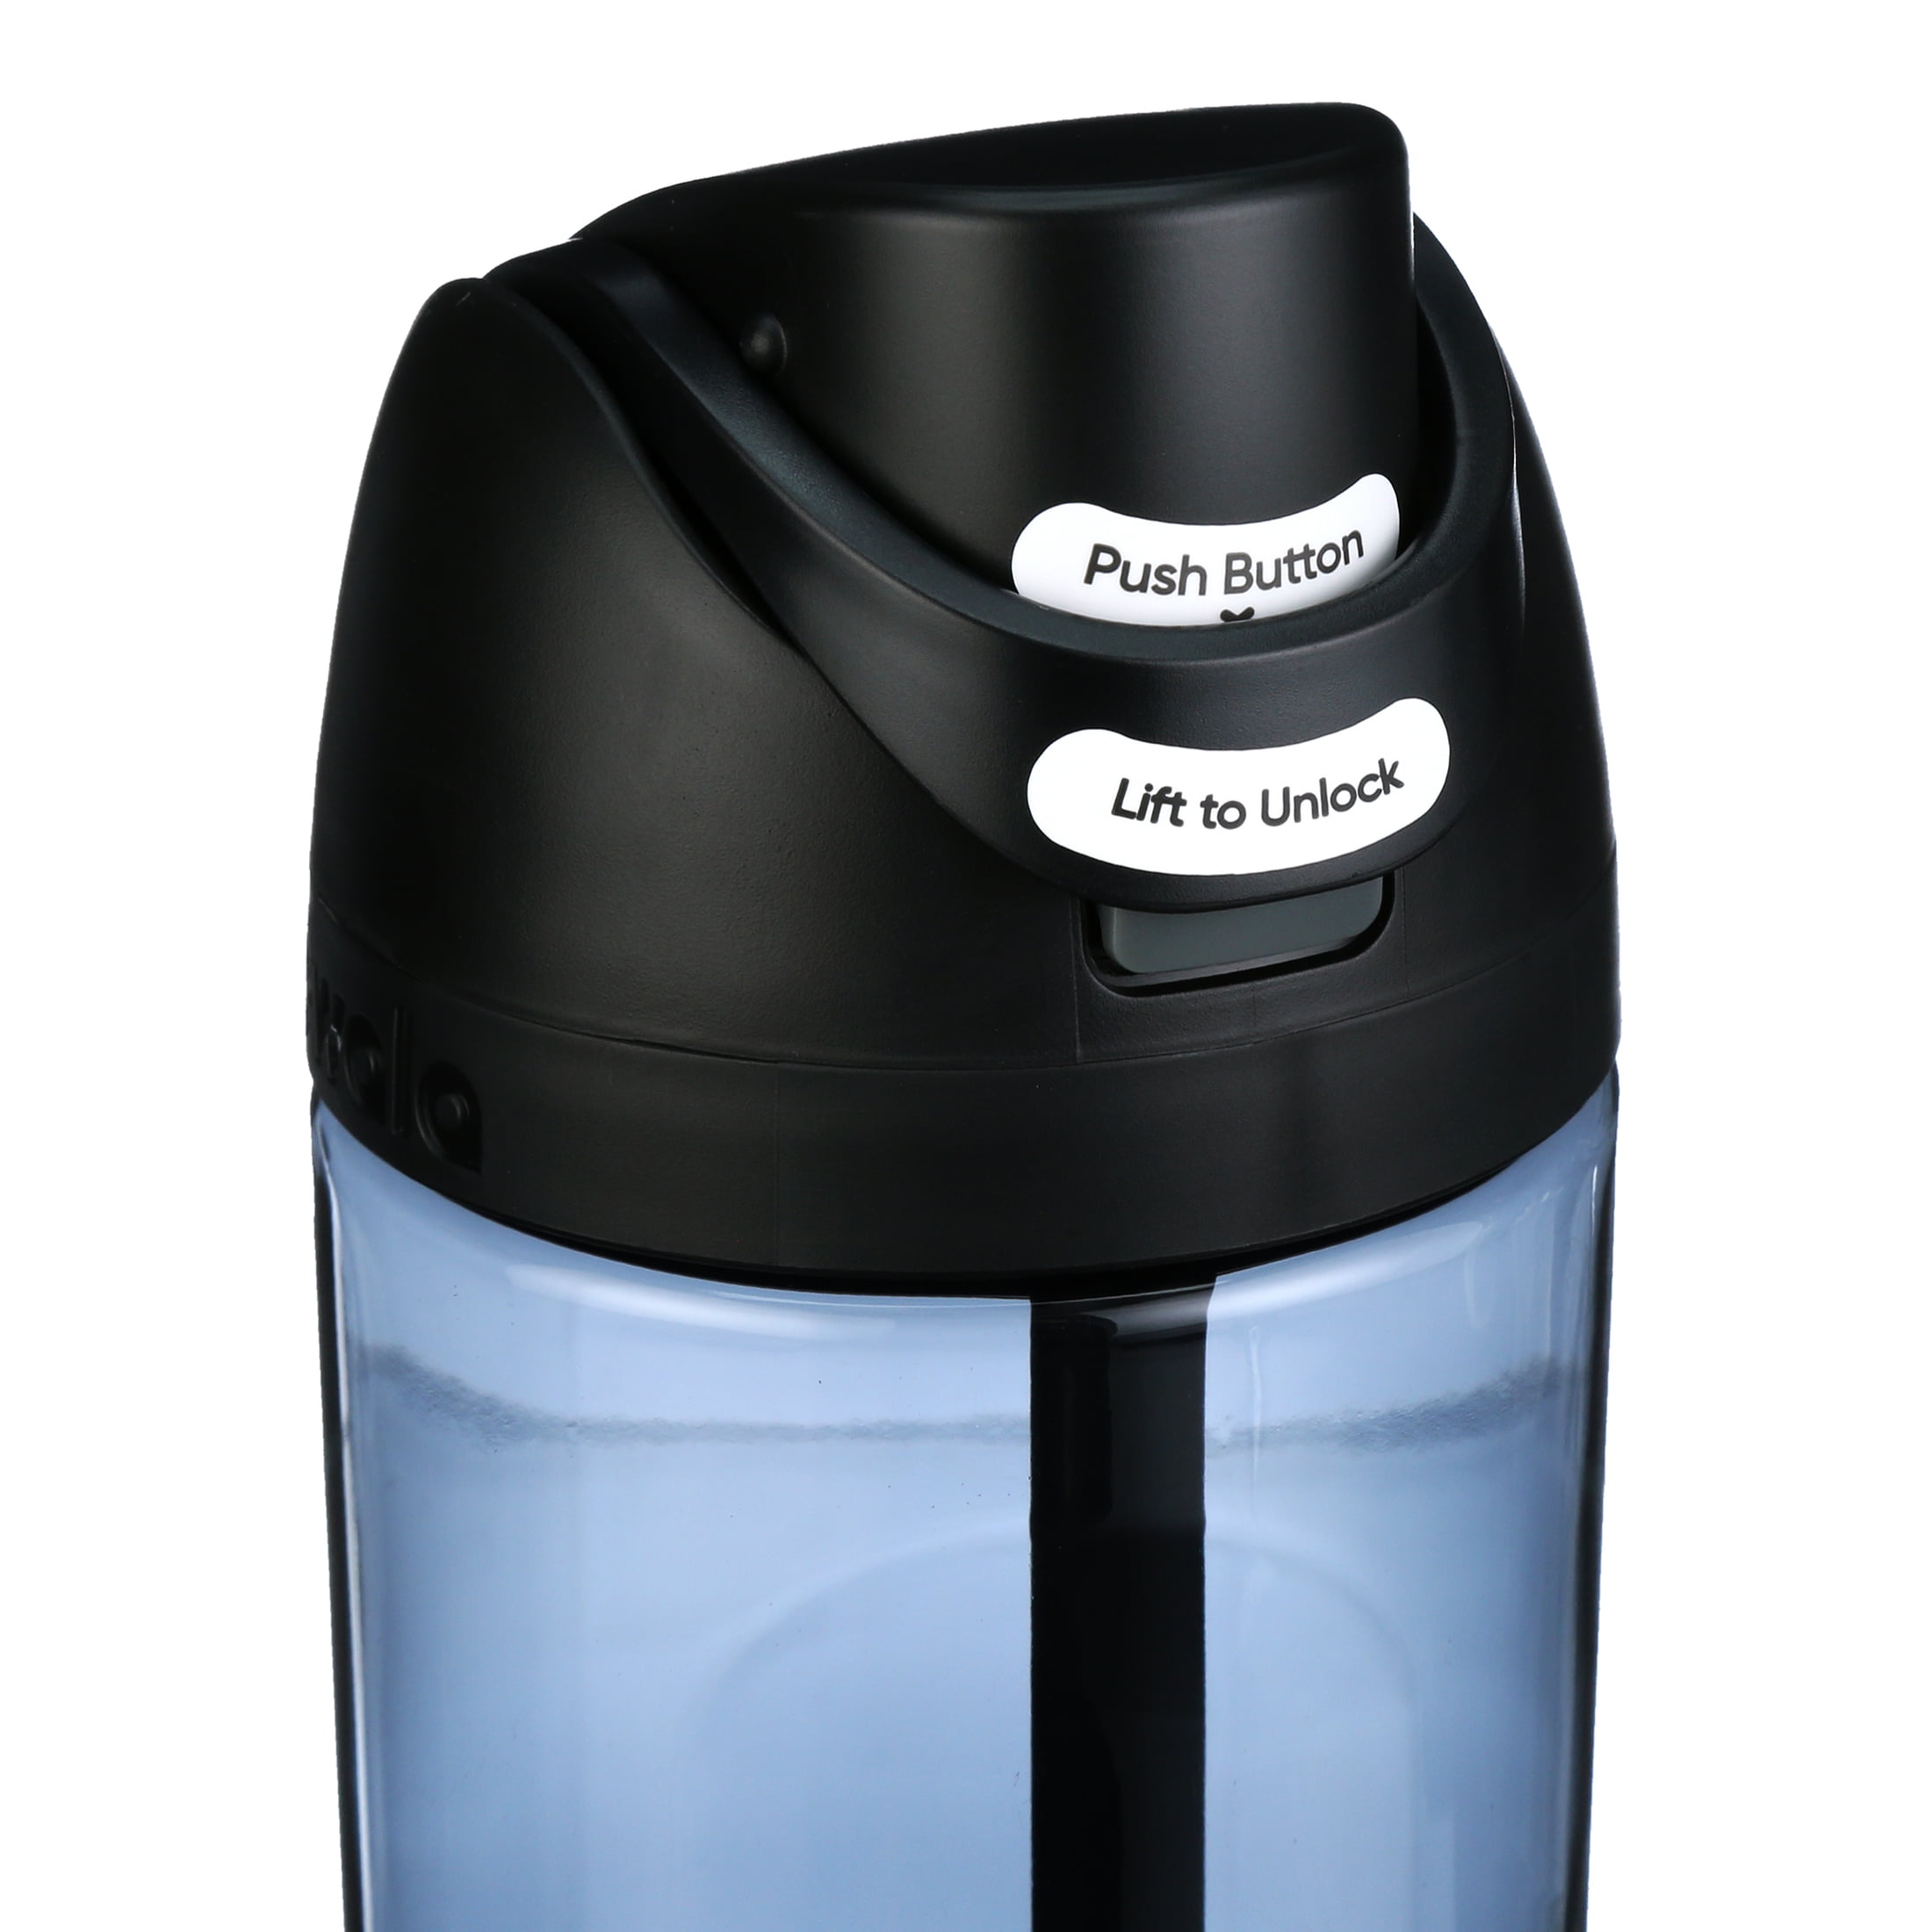 Owala Tritan Water Bottle - Black, 25 oz - Pay Less Super Markets